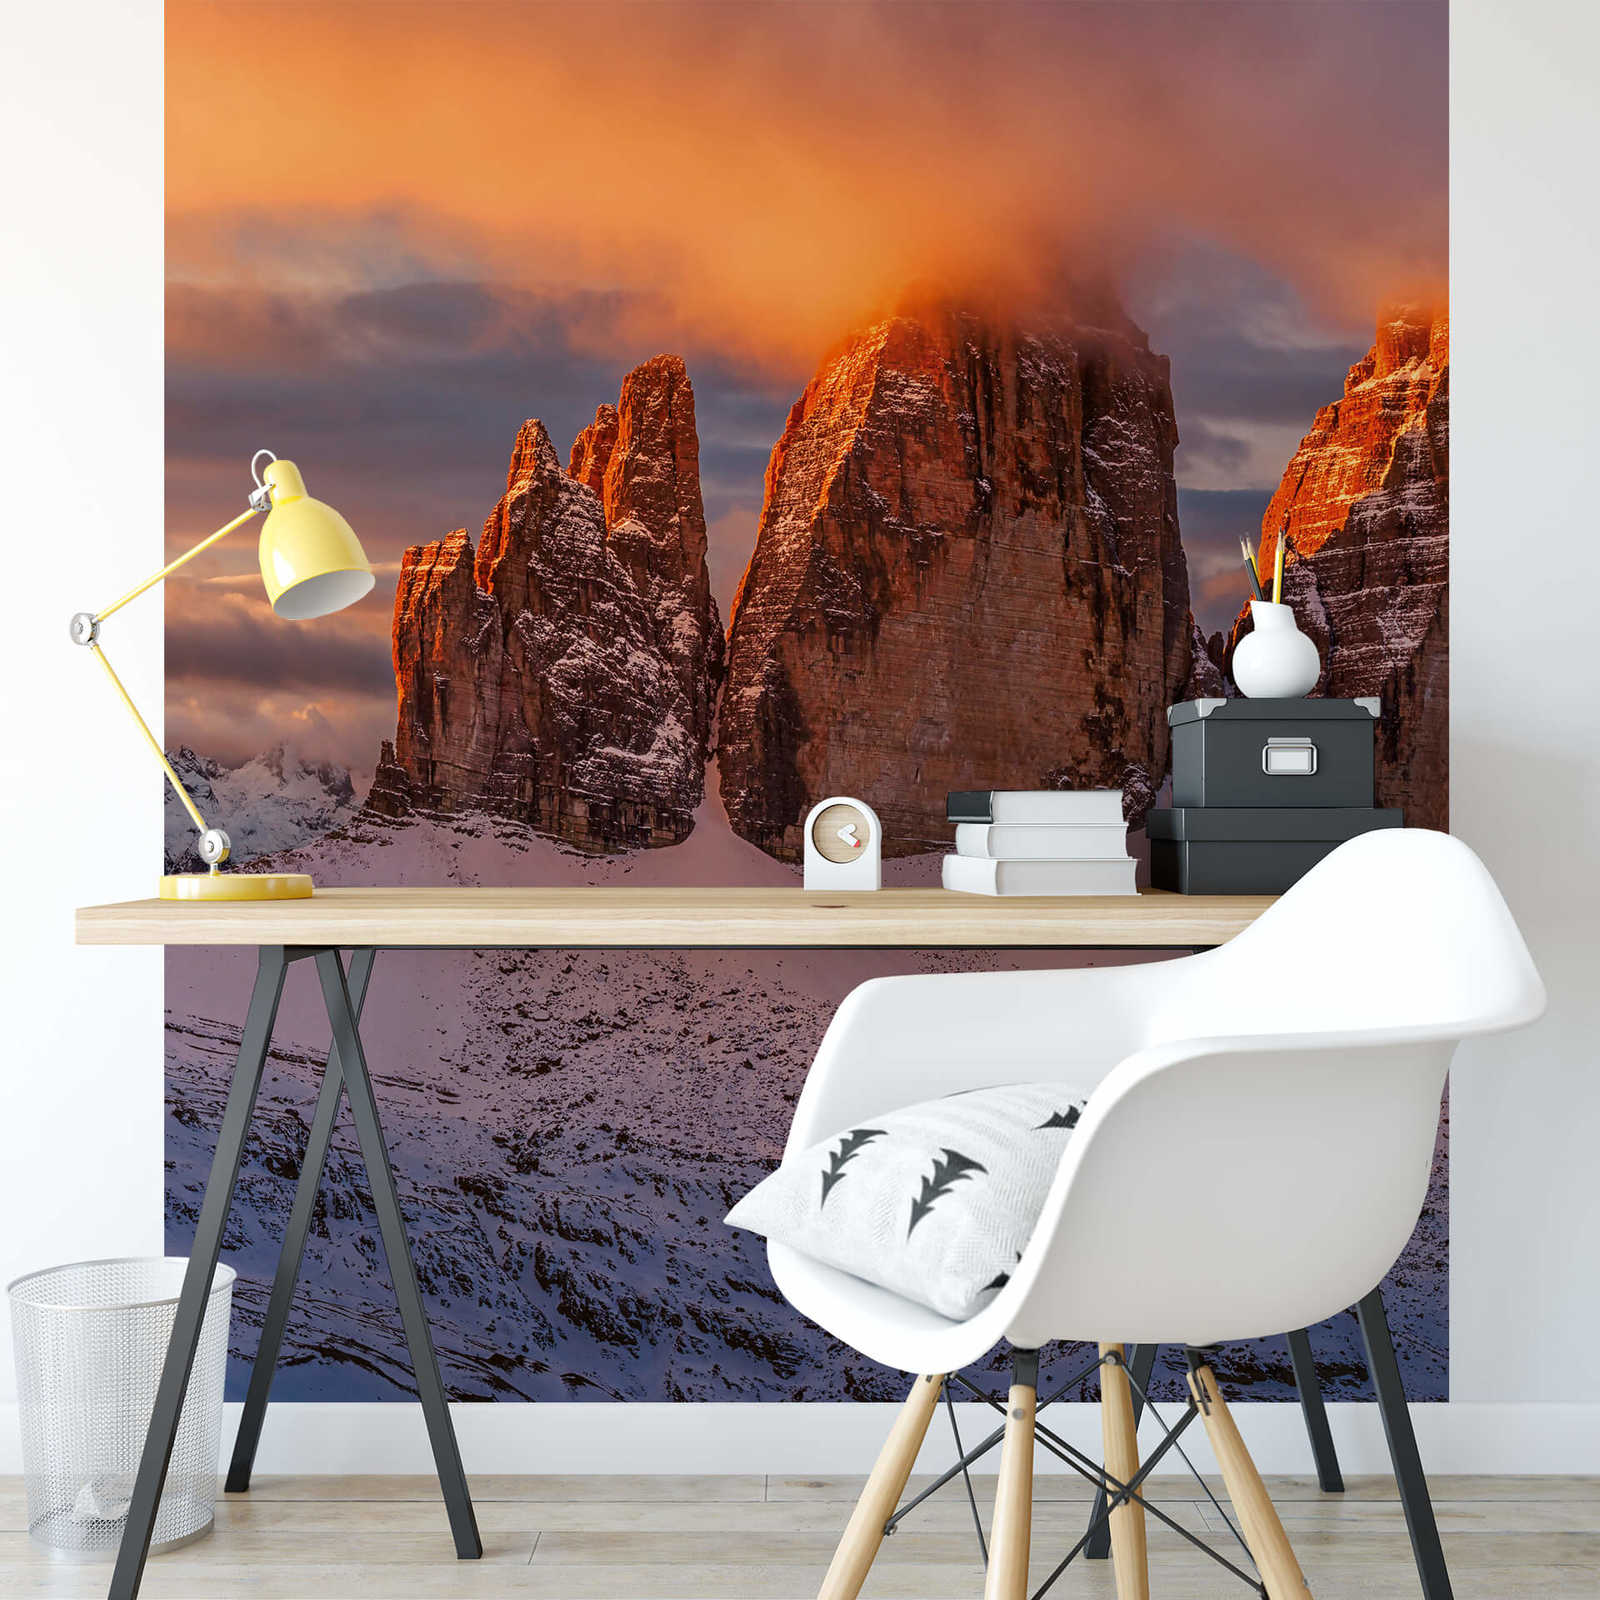             Photo wallpaper mountain top in Italy - white, brown, yellow
        